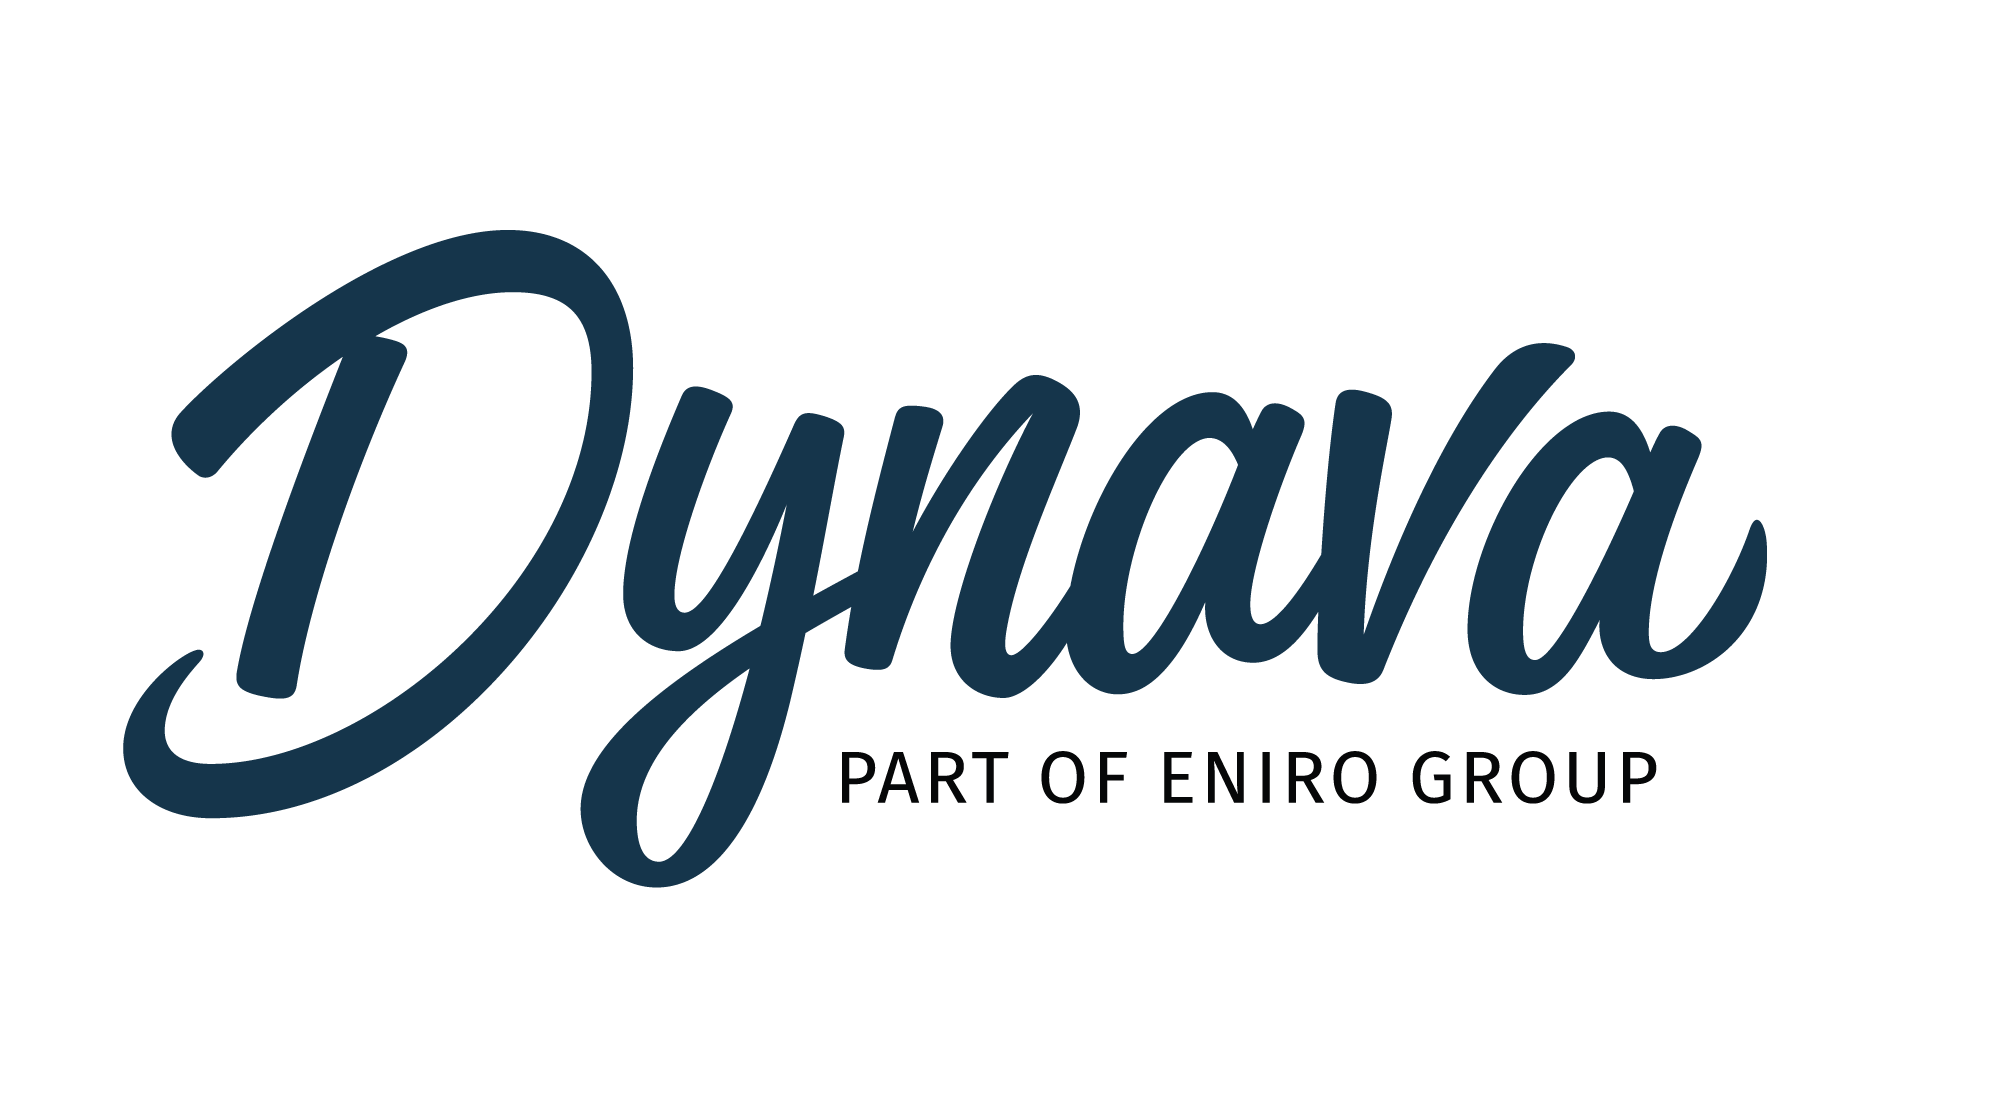 Dynava_POEG_logo.png